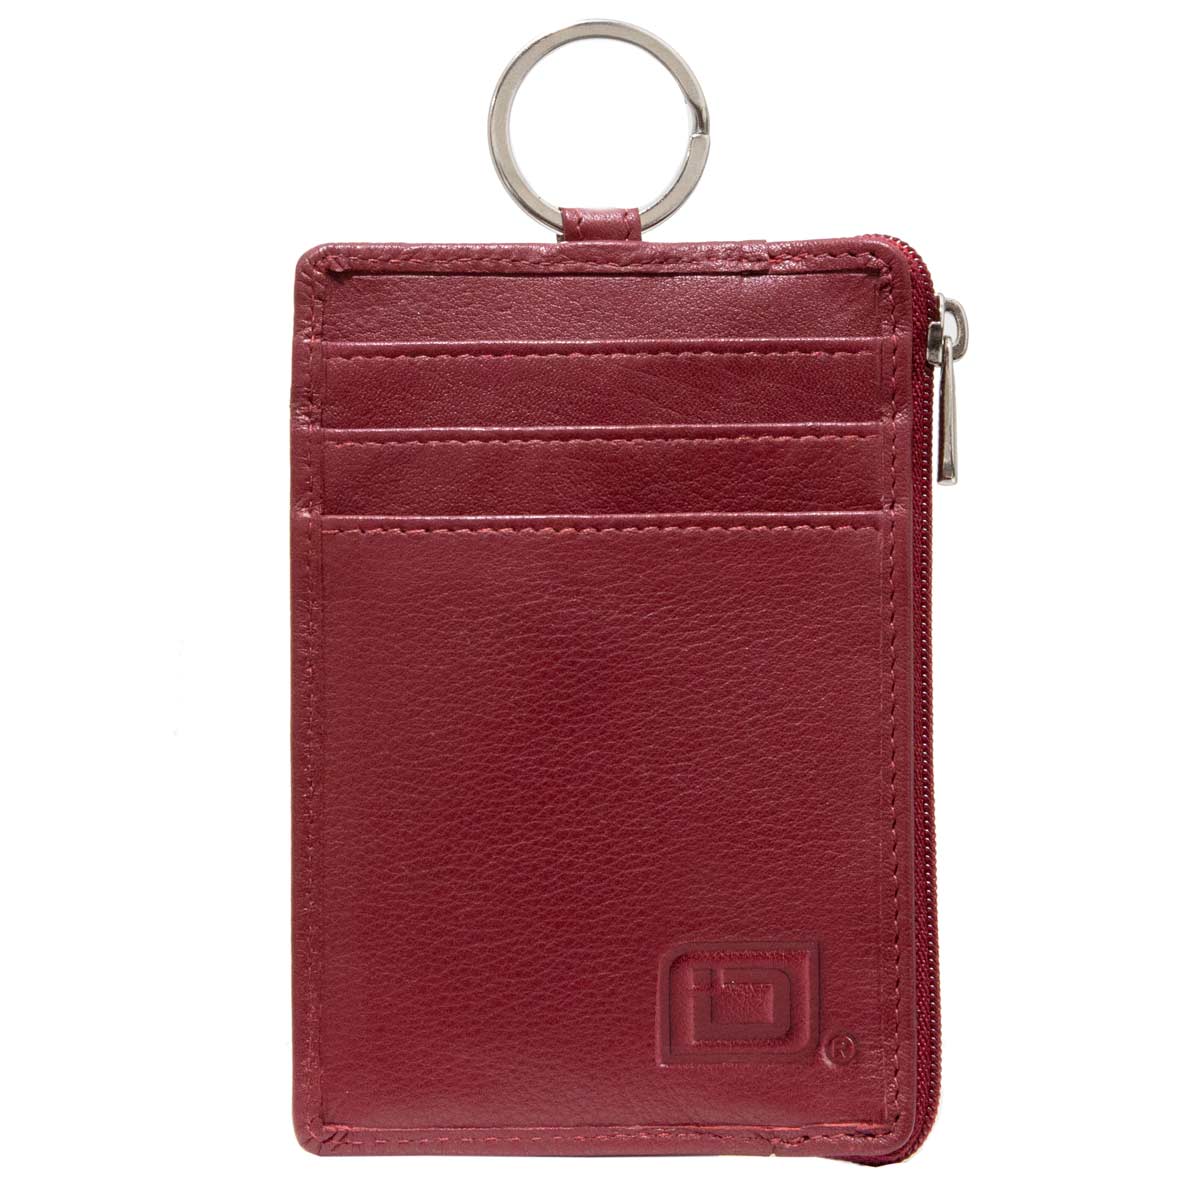 Key Bag Small Wallet Clutch Bag Change Purse Coin Wallet Cute